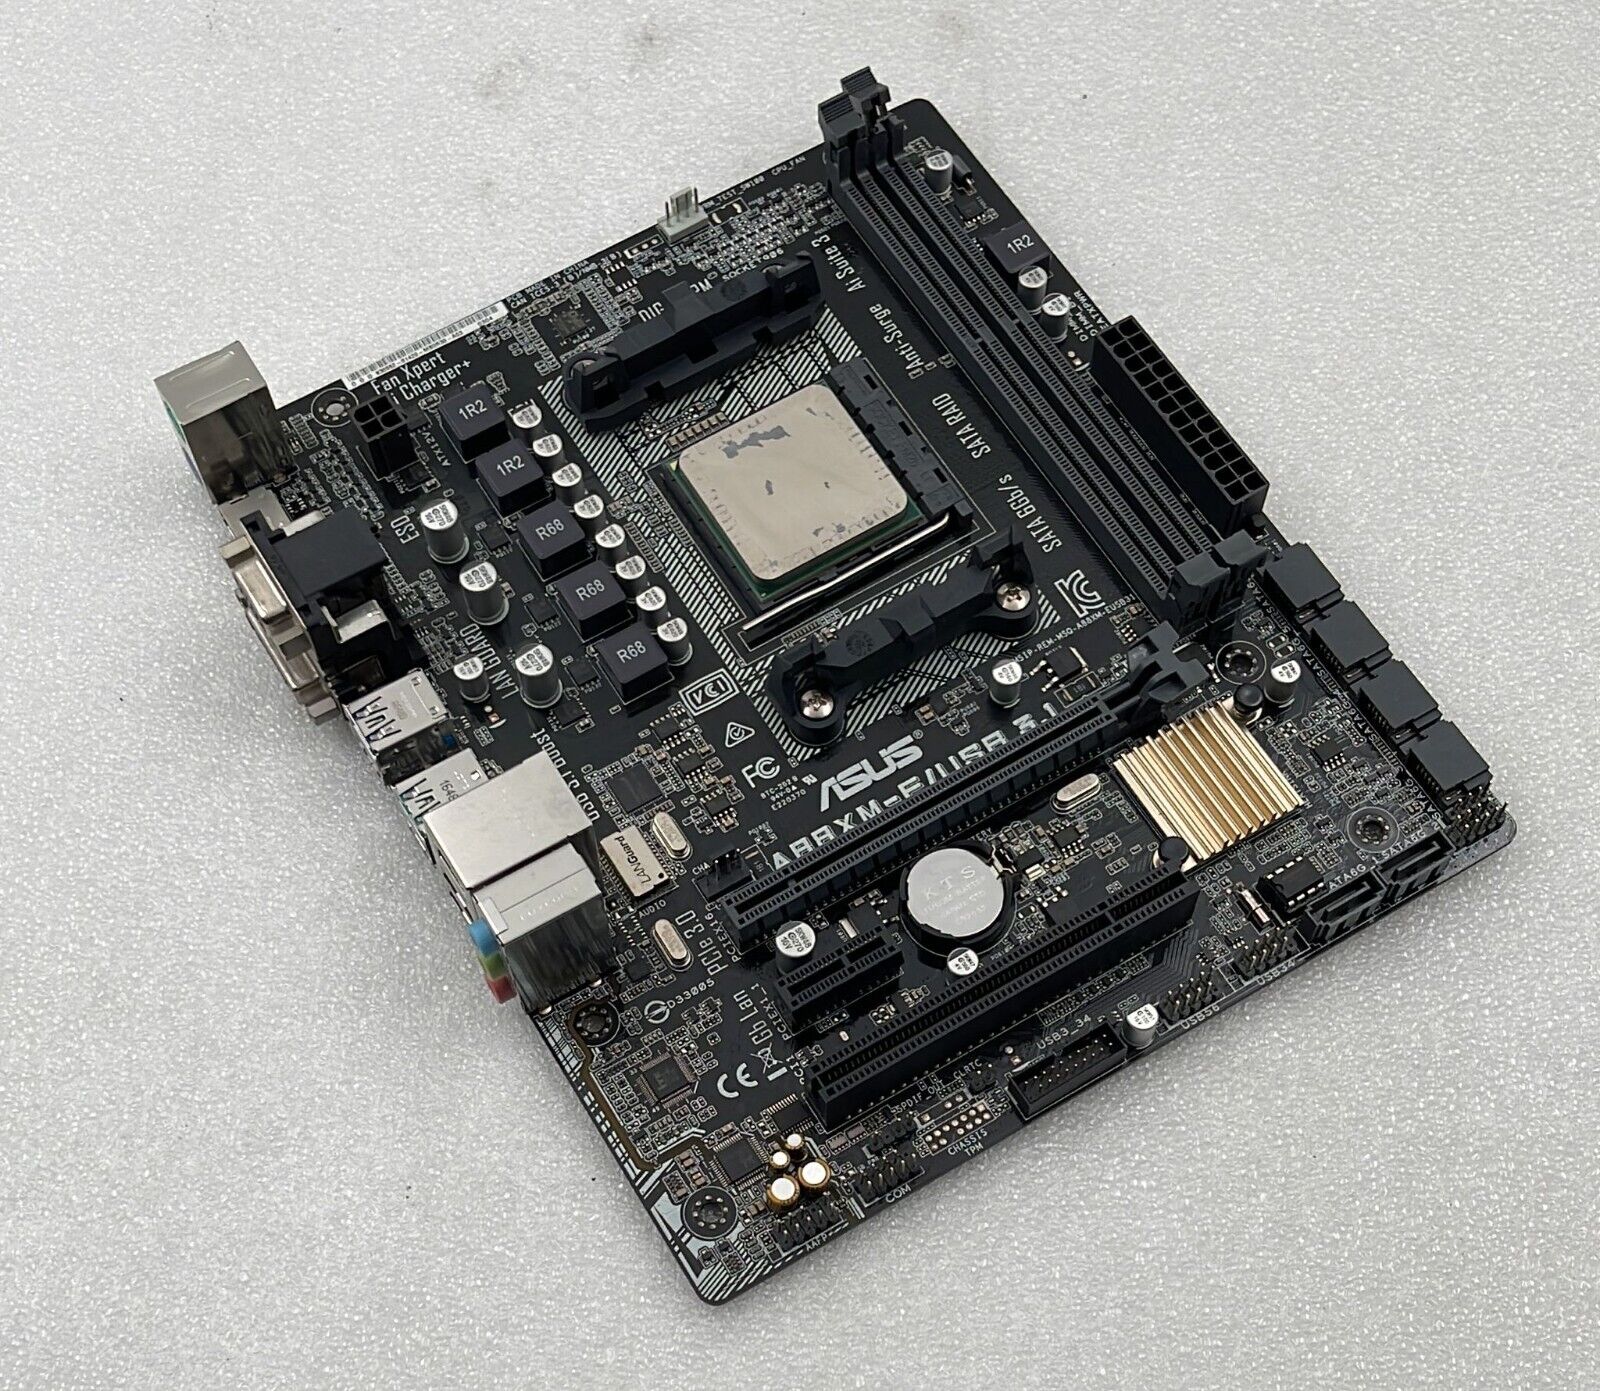 ASUS A88XM-E/USB 3.1 Motherboard W/ AMD A4-4000 CPU